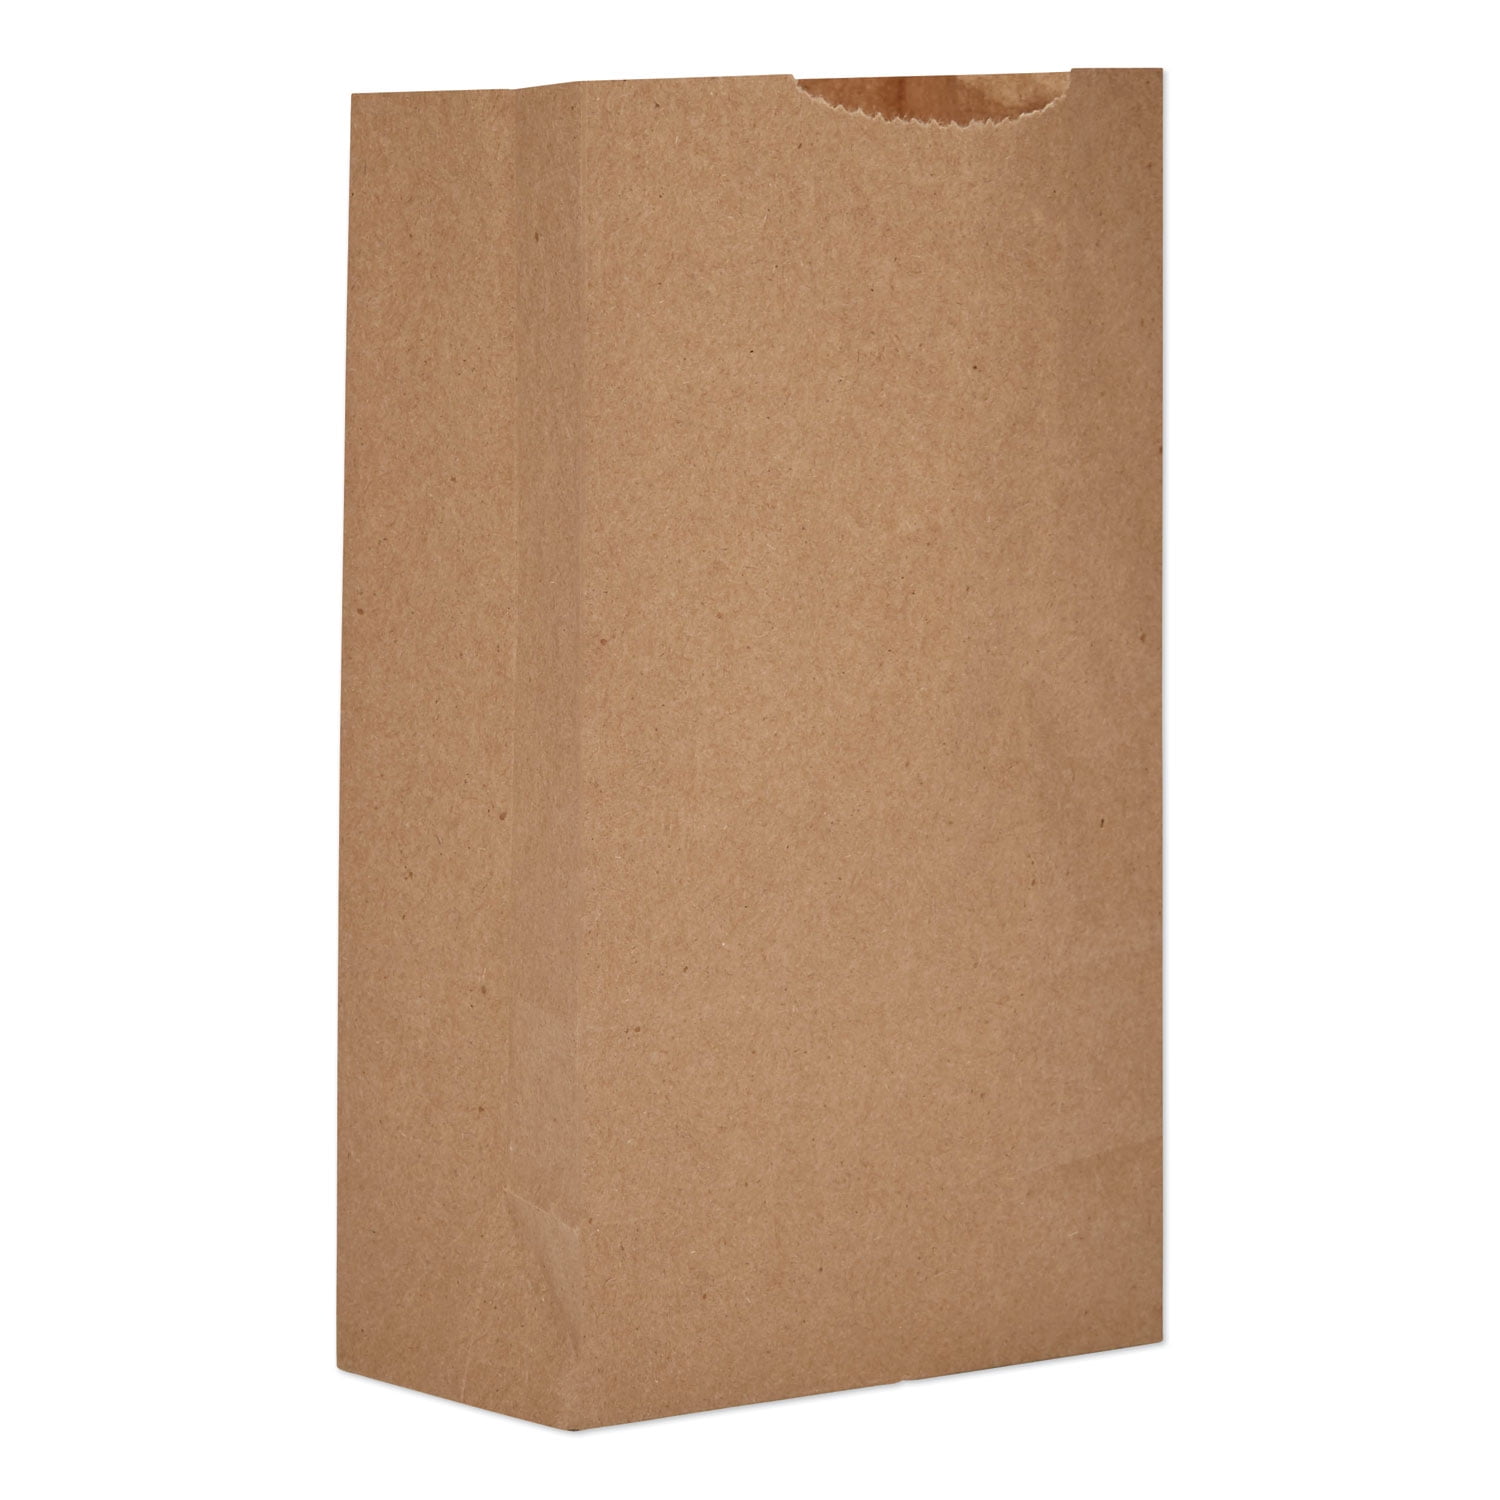 Duro Bag #4 Brown Kraft 500 ct Paper Grocery Bags Sack Lunch Merchandise